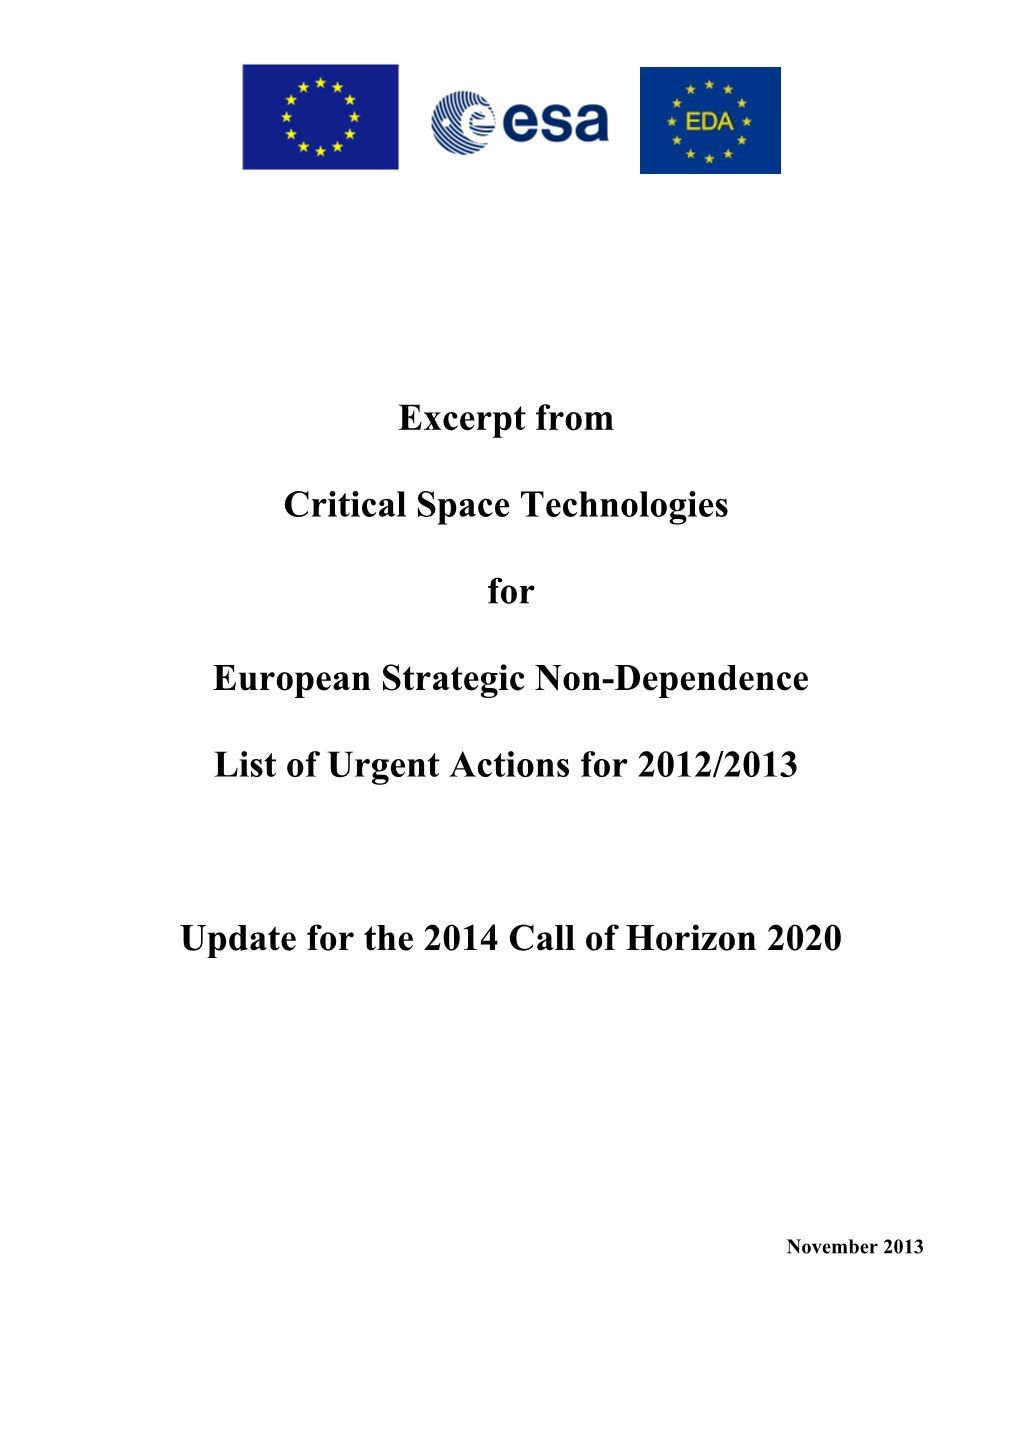 European Strategic Non-Dependence